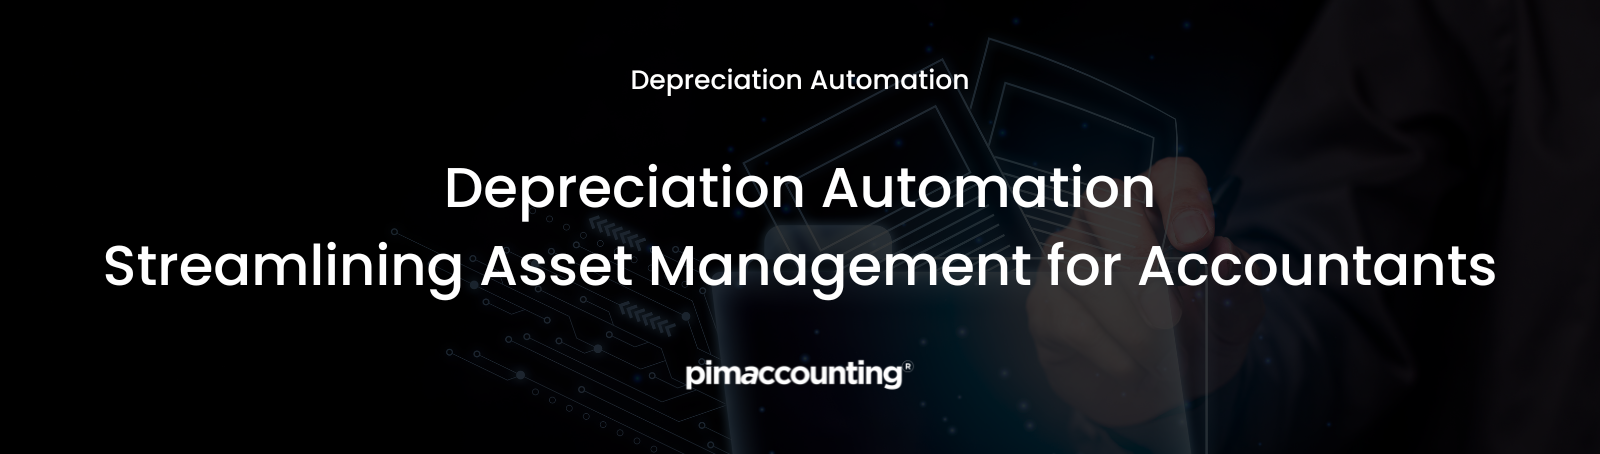 Depreciation Automation: Streamlining Asset Management